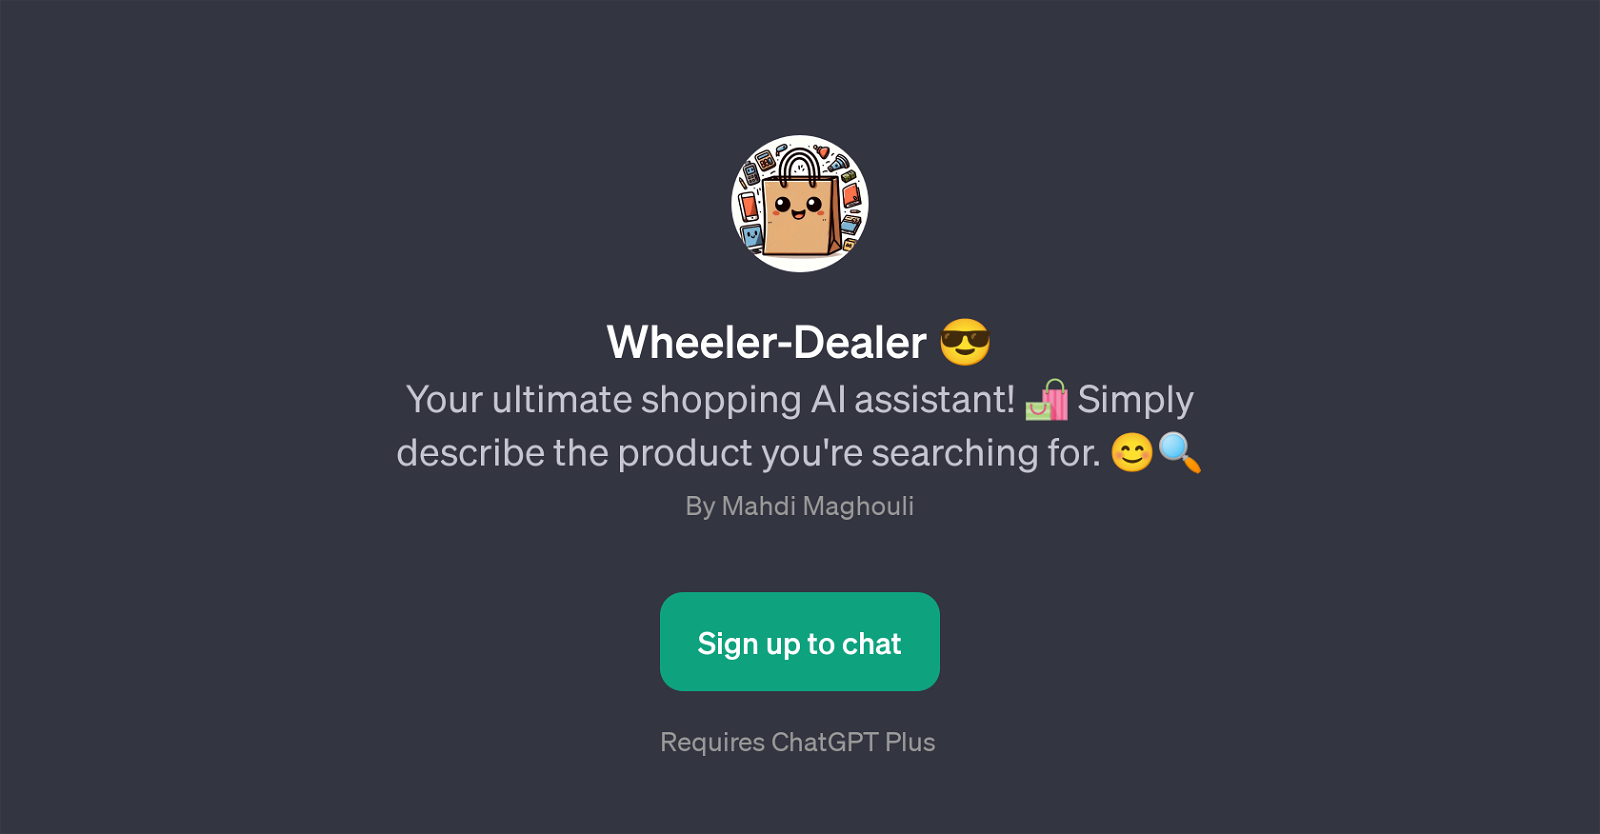 Wheeler-Dealer website